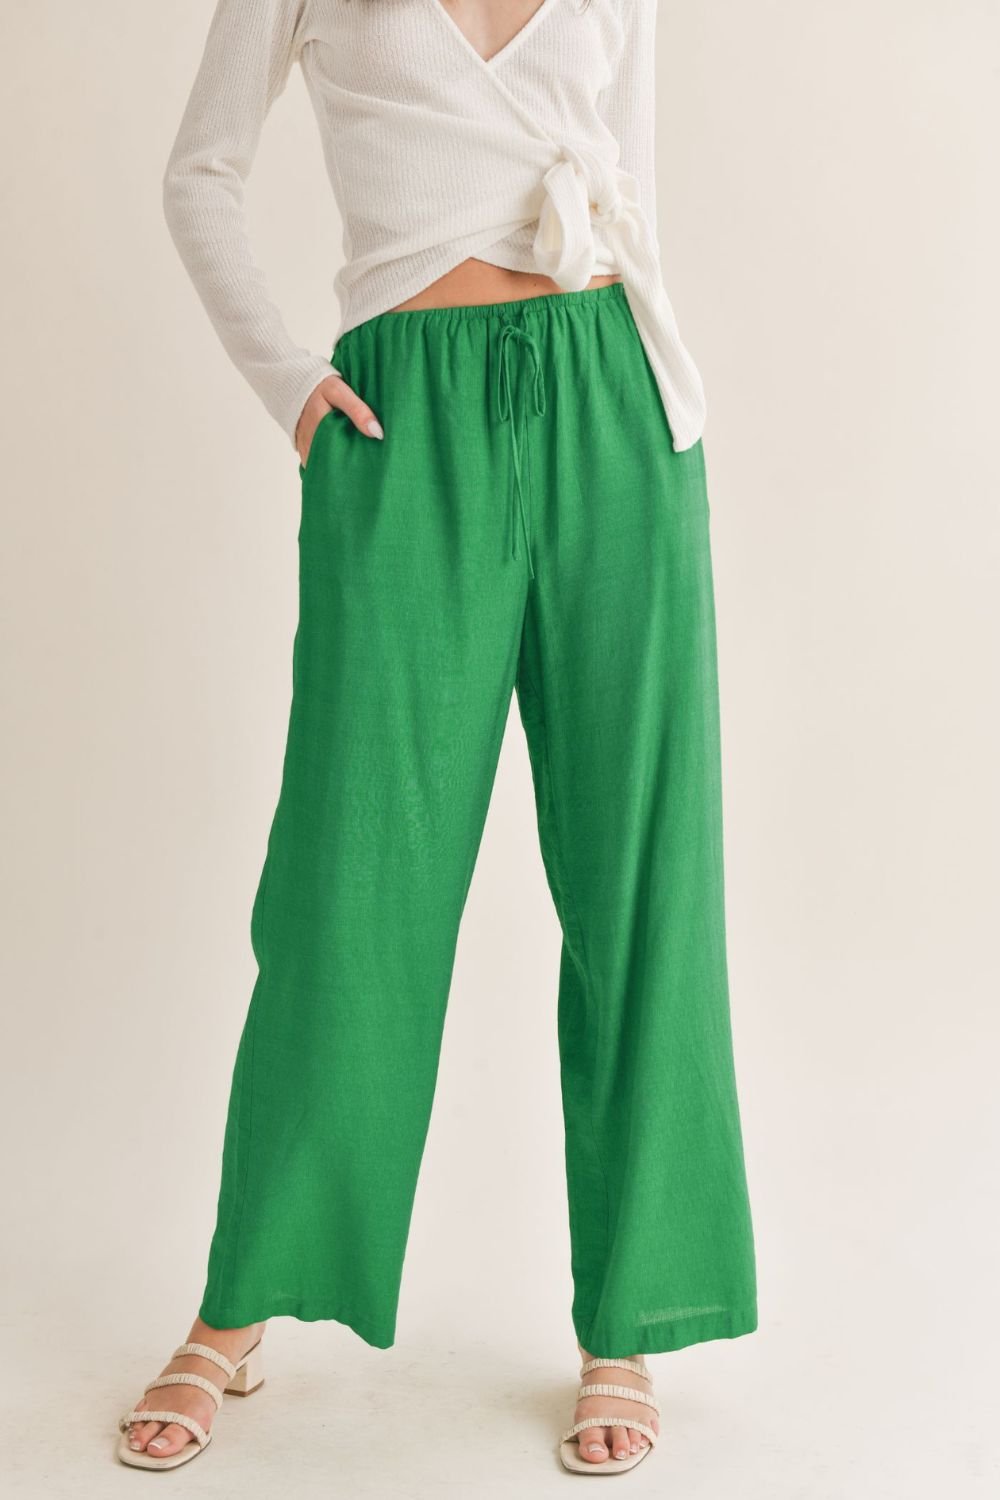 Women's Wide Leg Pants | Tie Waist | Green - Women's Pants - Blooming Daily